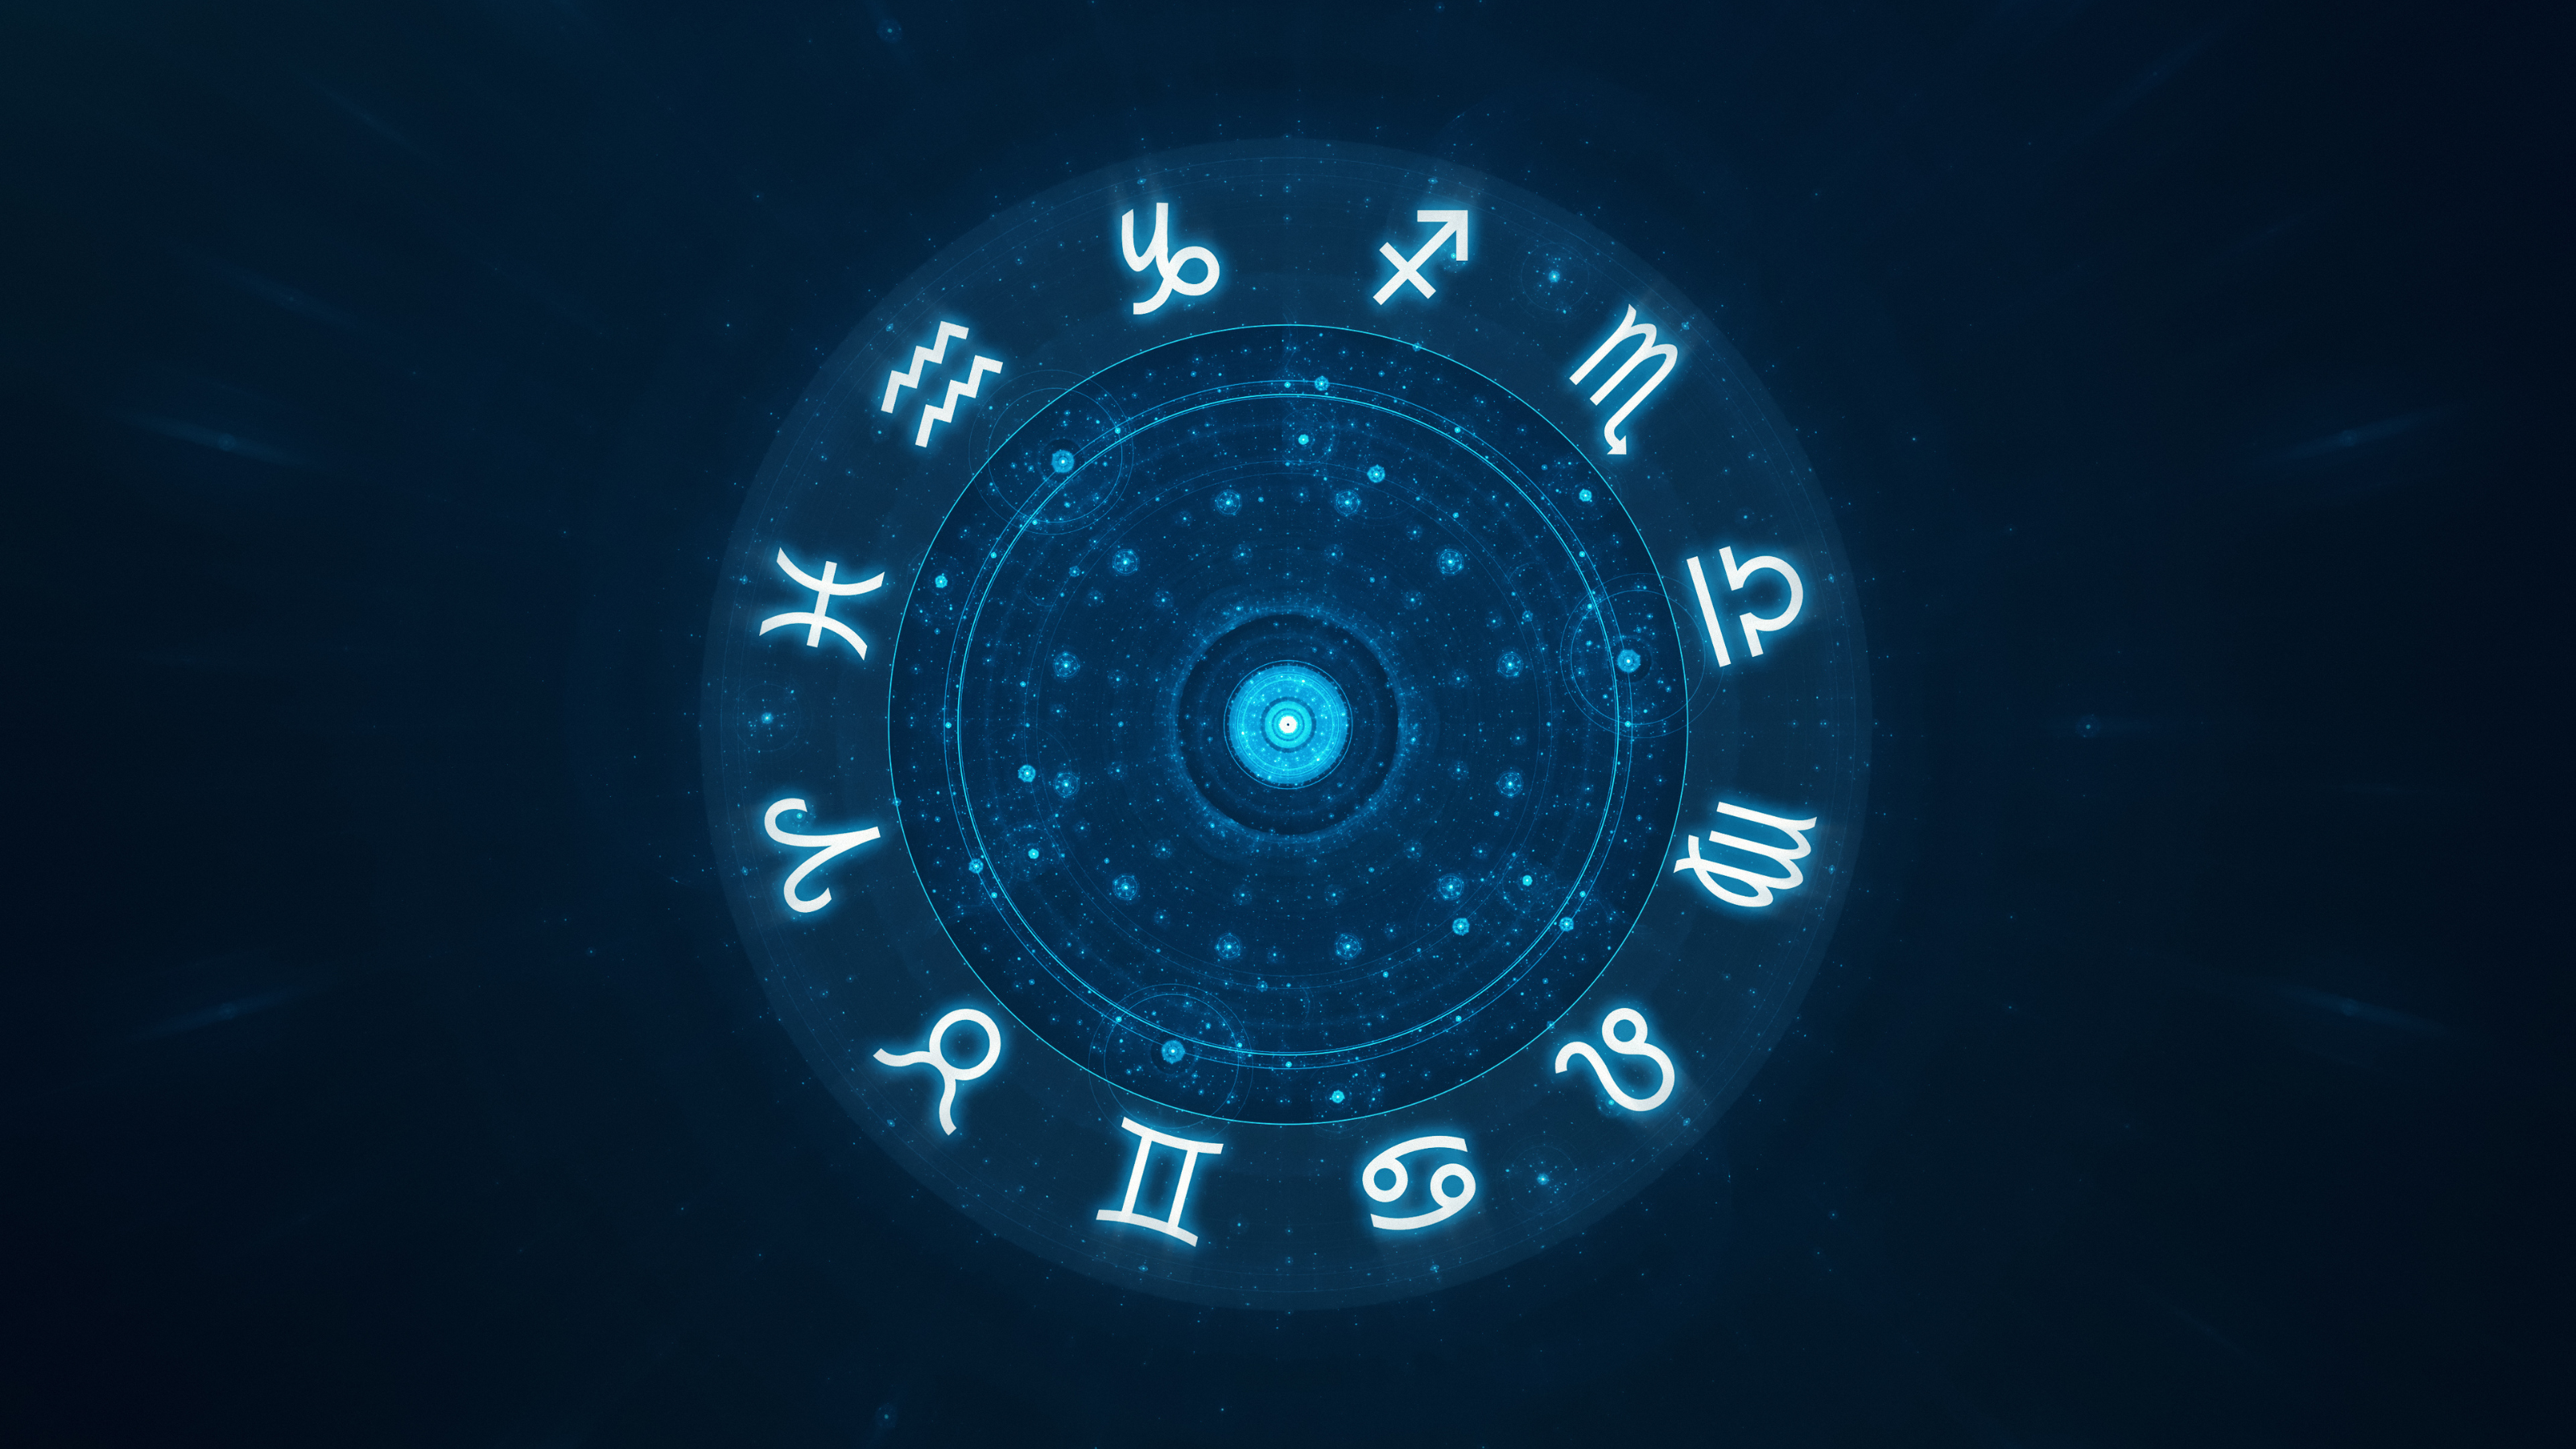 Unlock The Secrets Of Your Zodiac Sign!